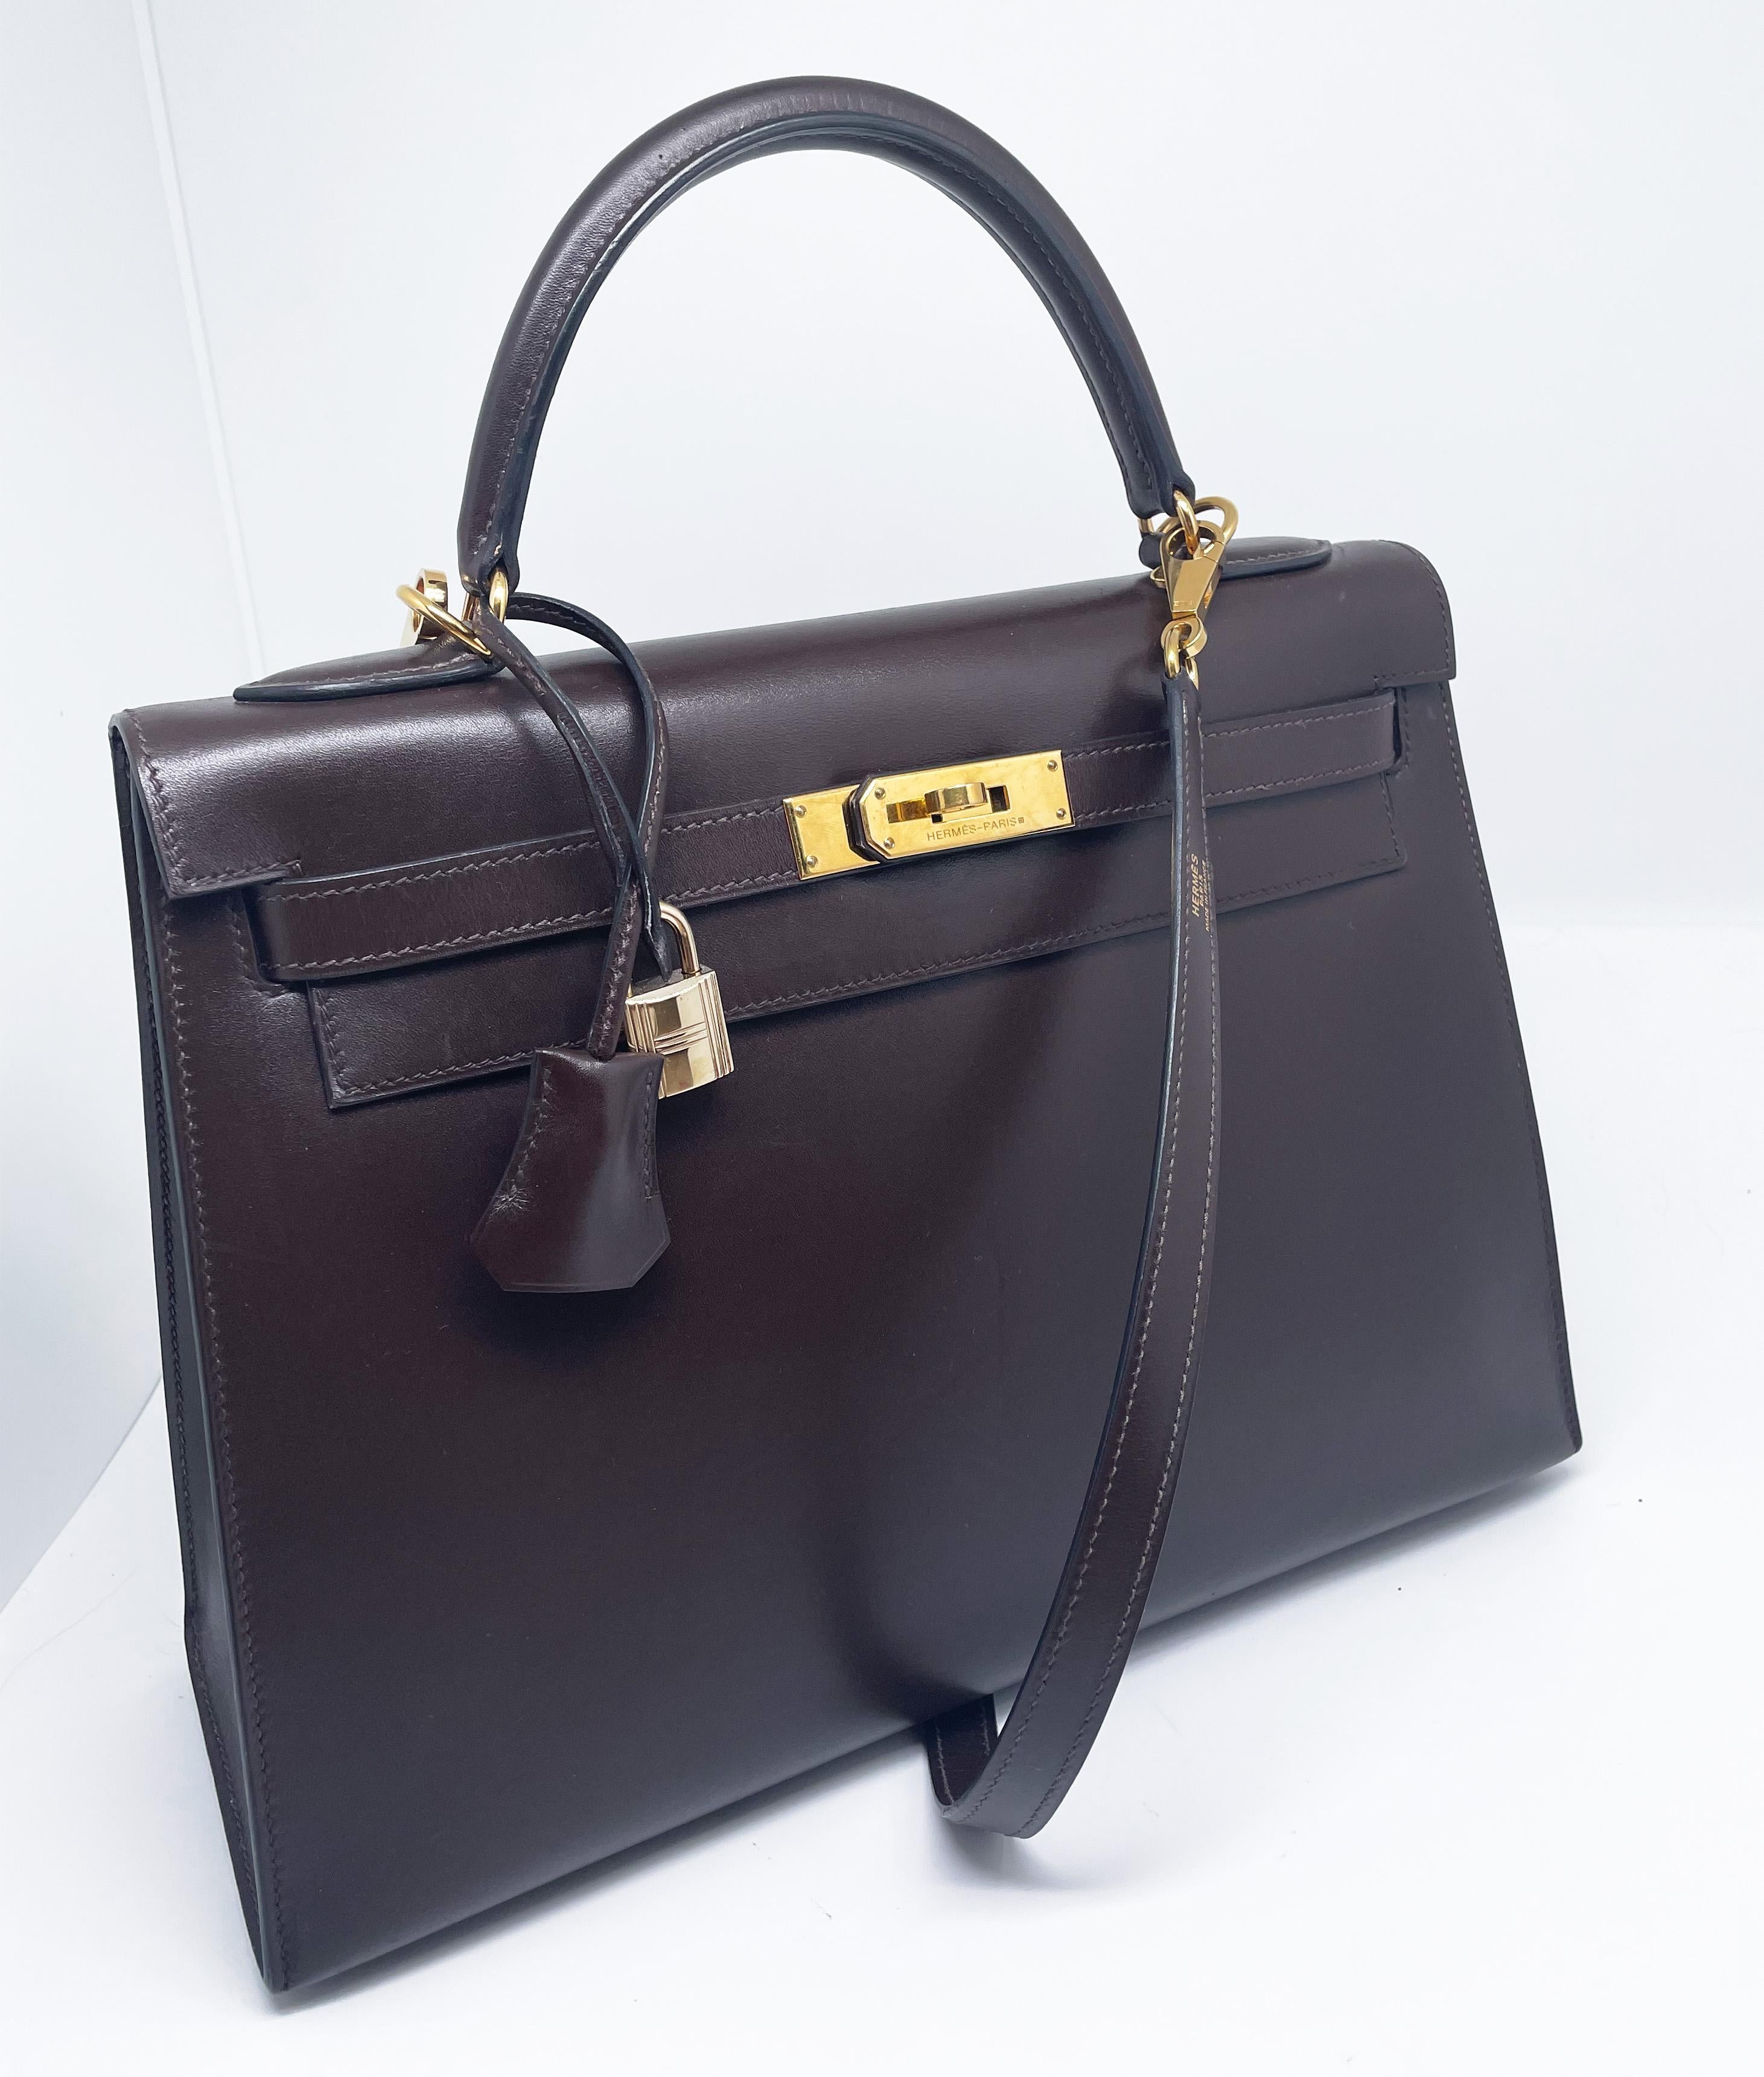 Black Superb Hermès Kelly saddler handbag 32 cm in brown box